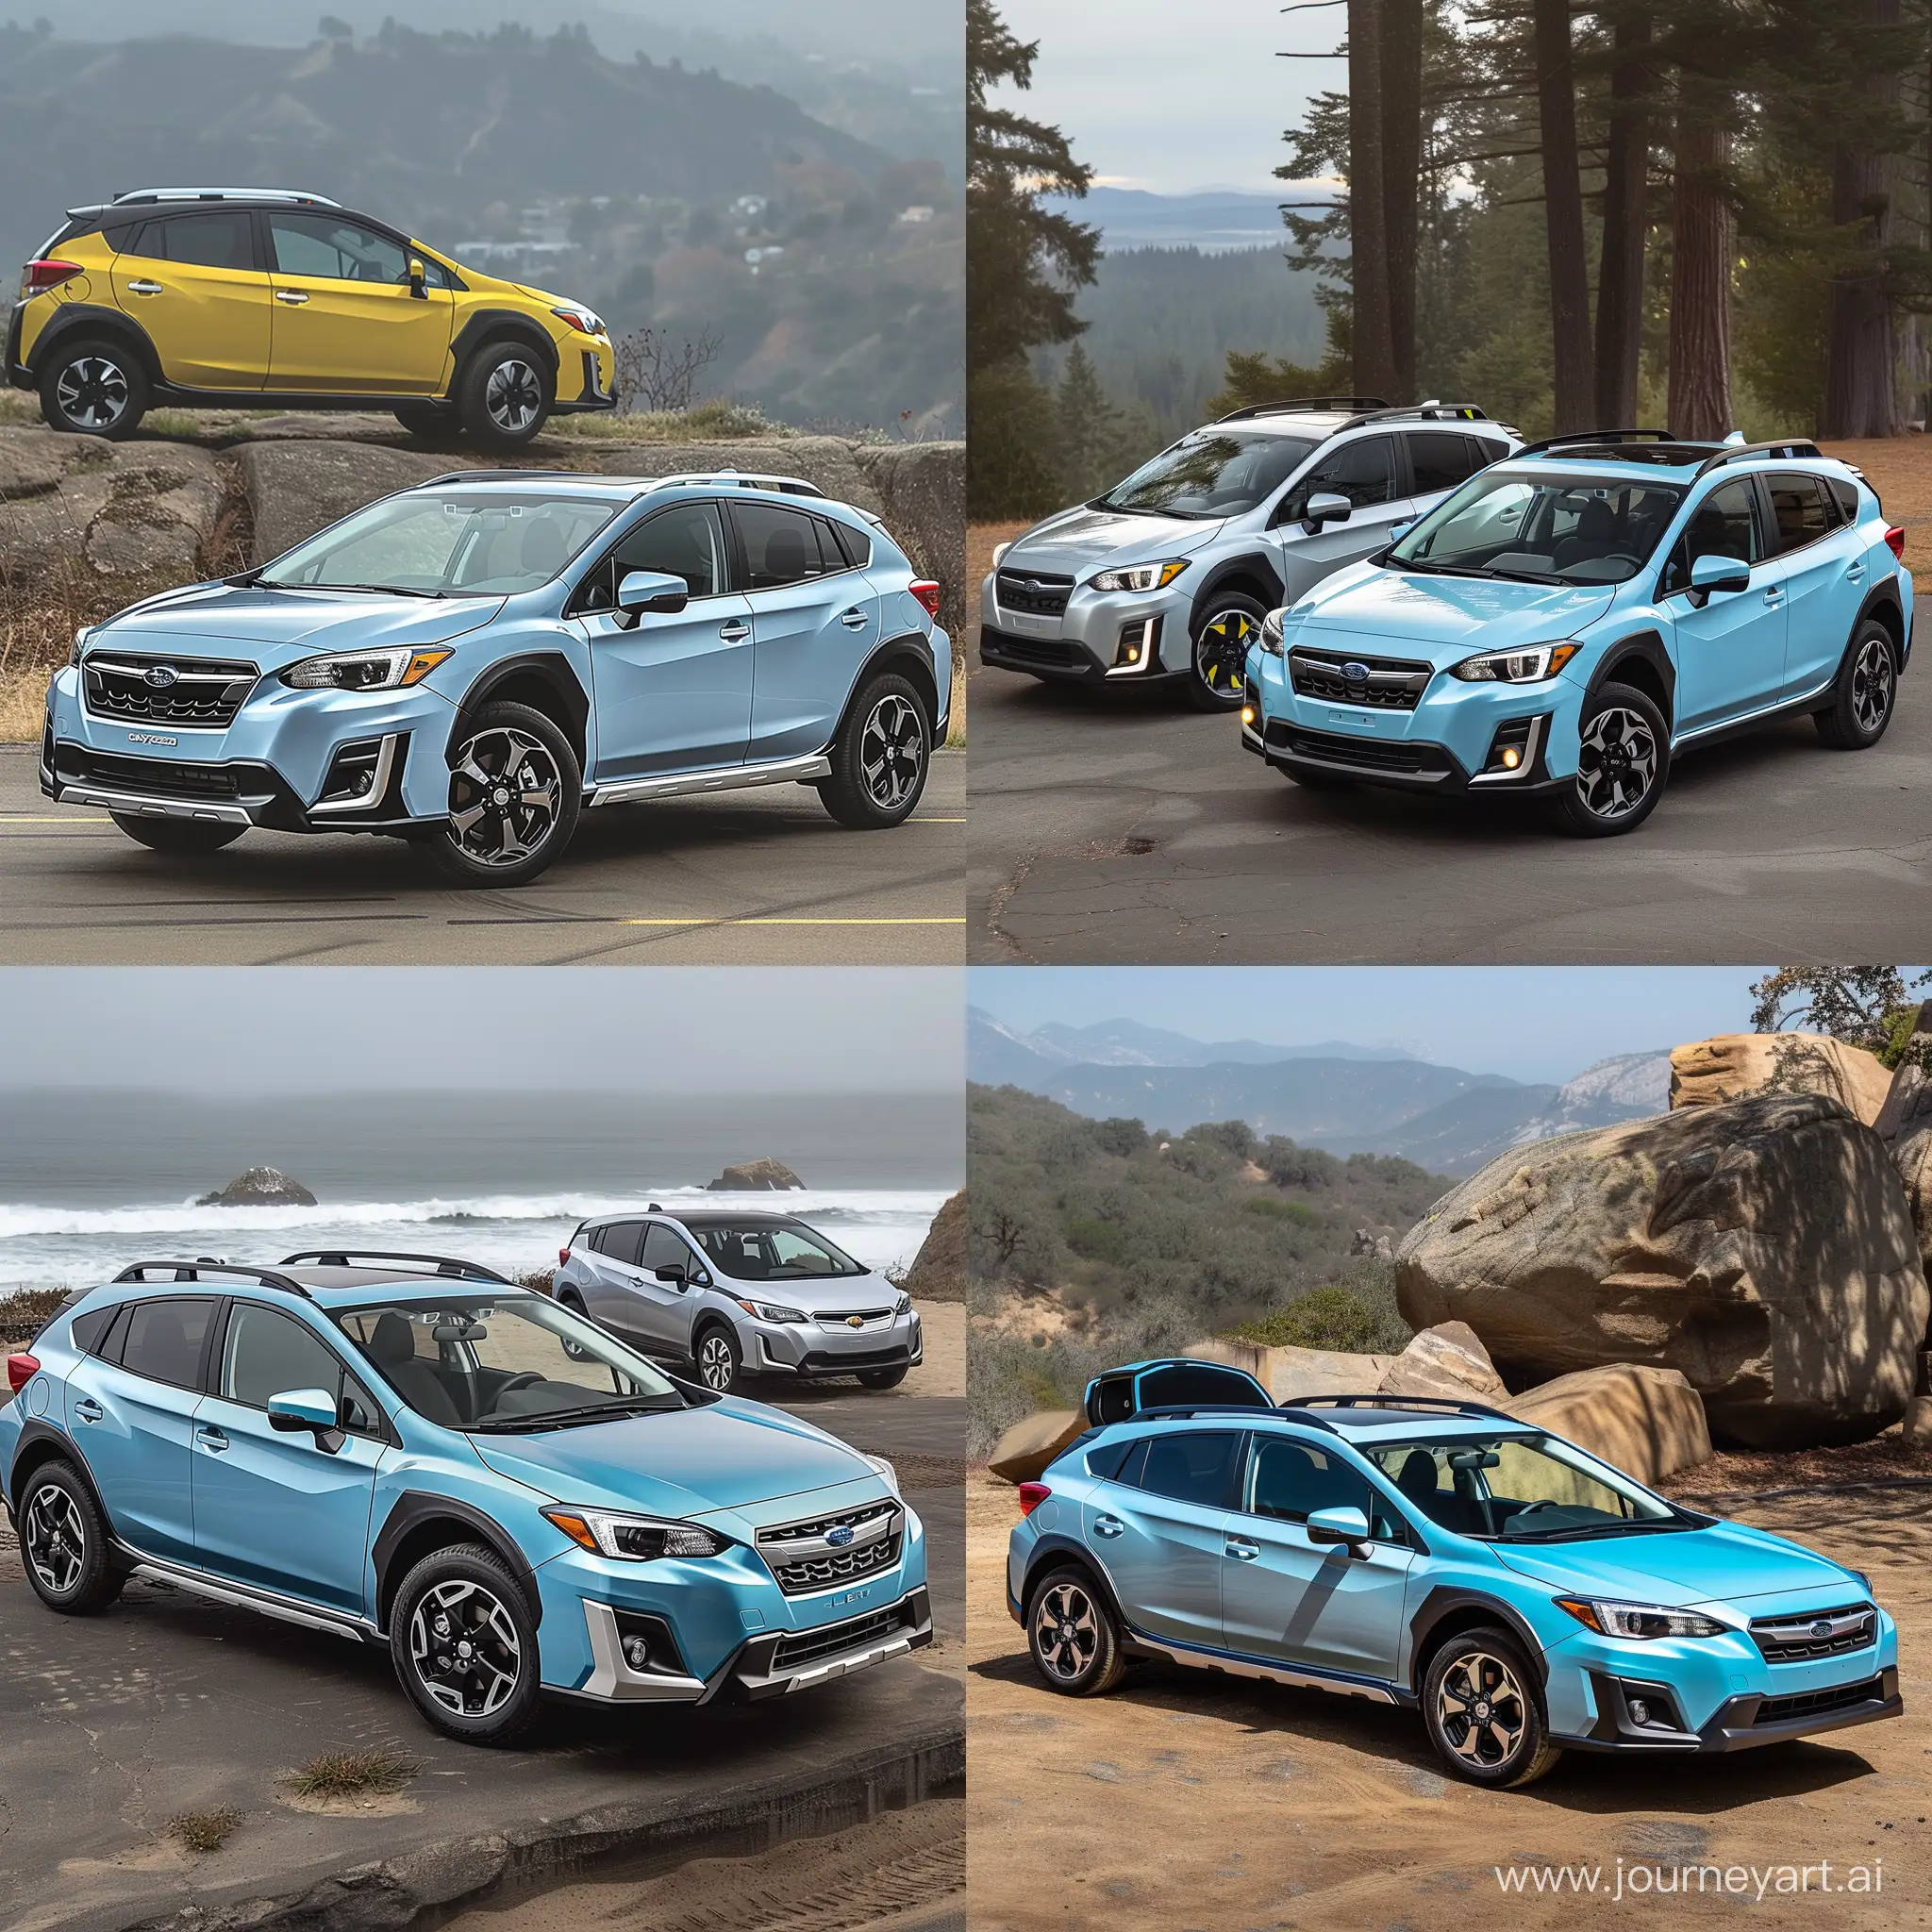 Futuristic-Hybrid-Car-Mashup-Blend-of-Subaru-Crosstrek-2023-and-Chevrolet-Bolt